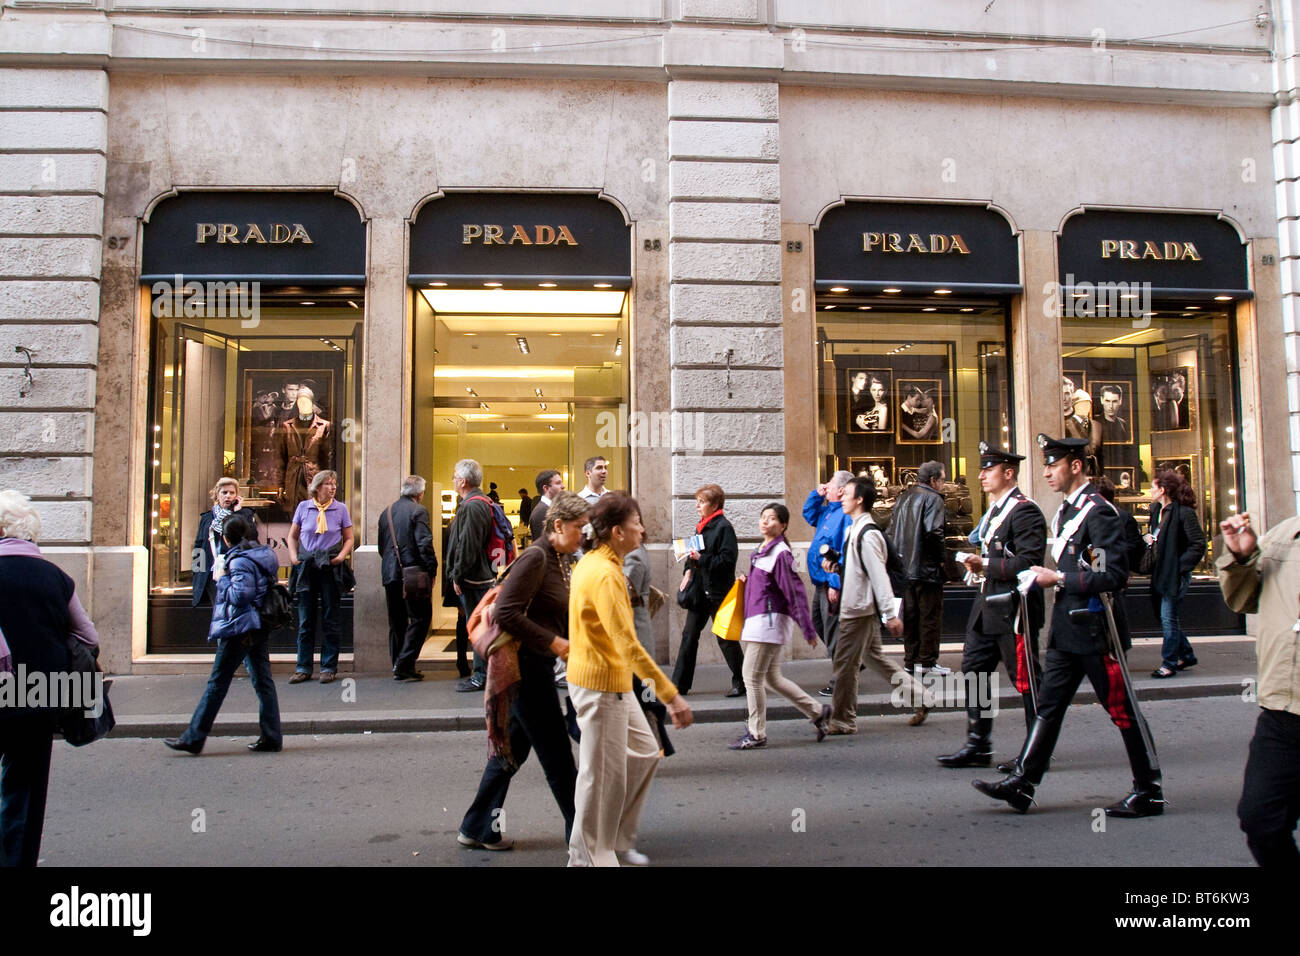 Via dei Condotti, Prada fashion store windows on background. Rome Italy  Stock Photo - Alamy